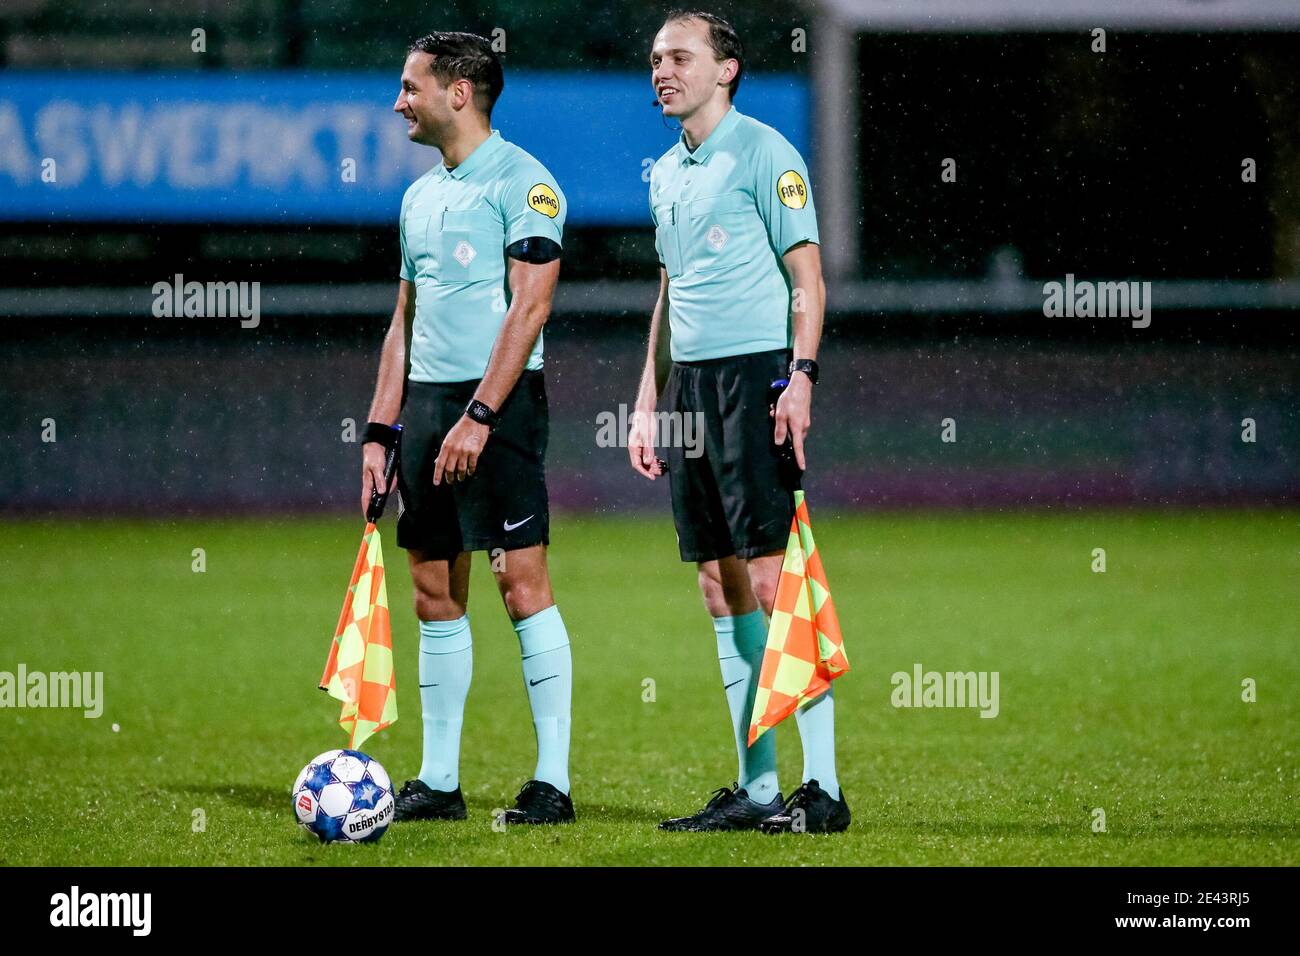 NIJMEGEN, NETHERLANDS - JANUARY 21: (L-R): Assistant Referee Halis Murat Kucukerbir, Assistant Referee Nils van Kampen during the Dutch KNVB Cup match Stock Photo